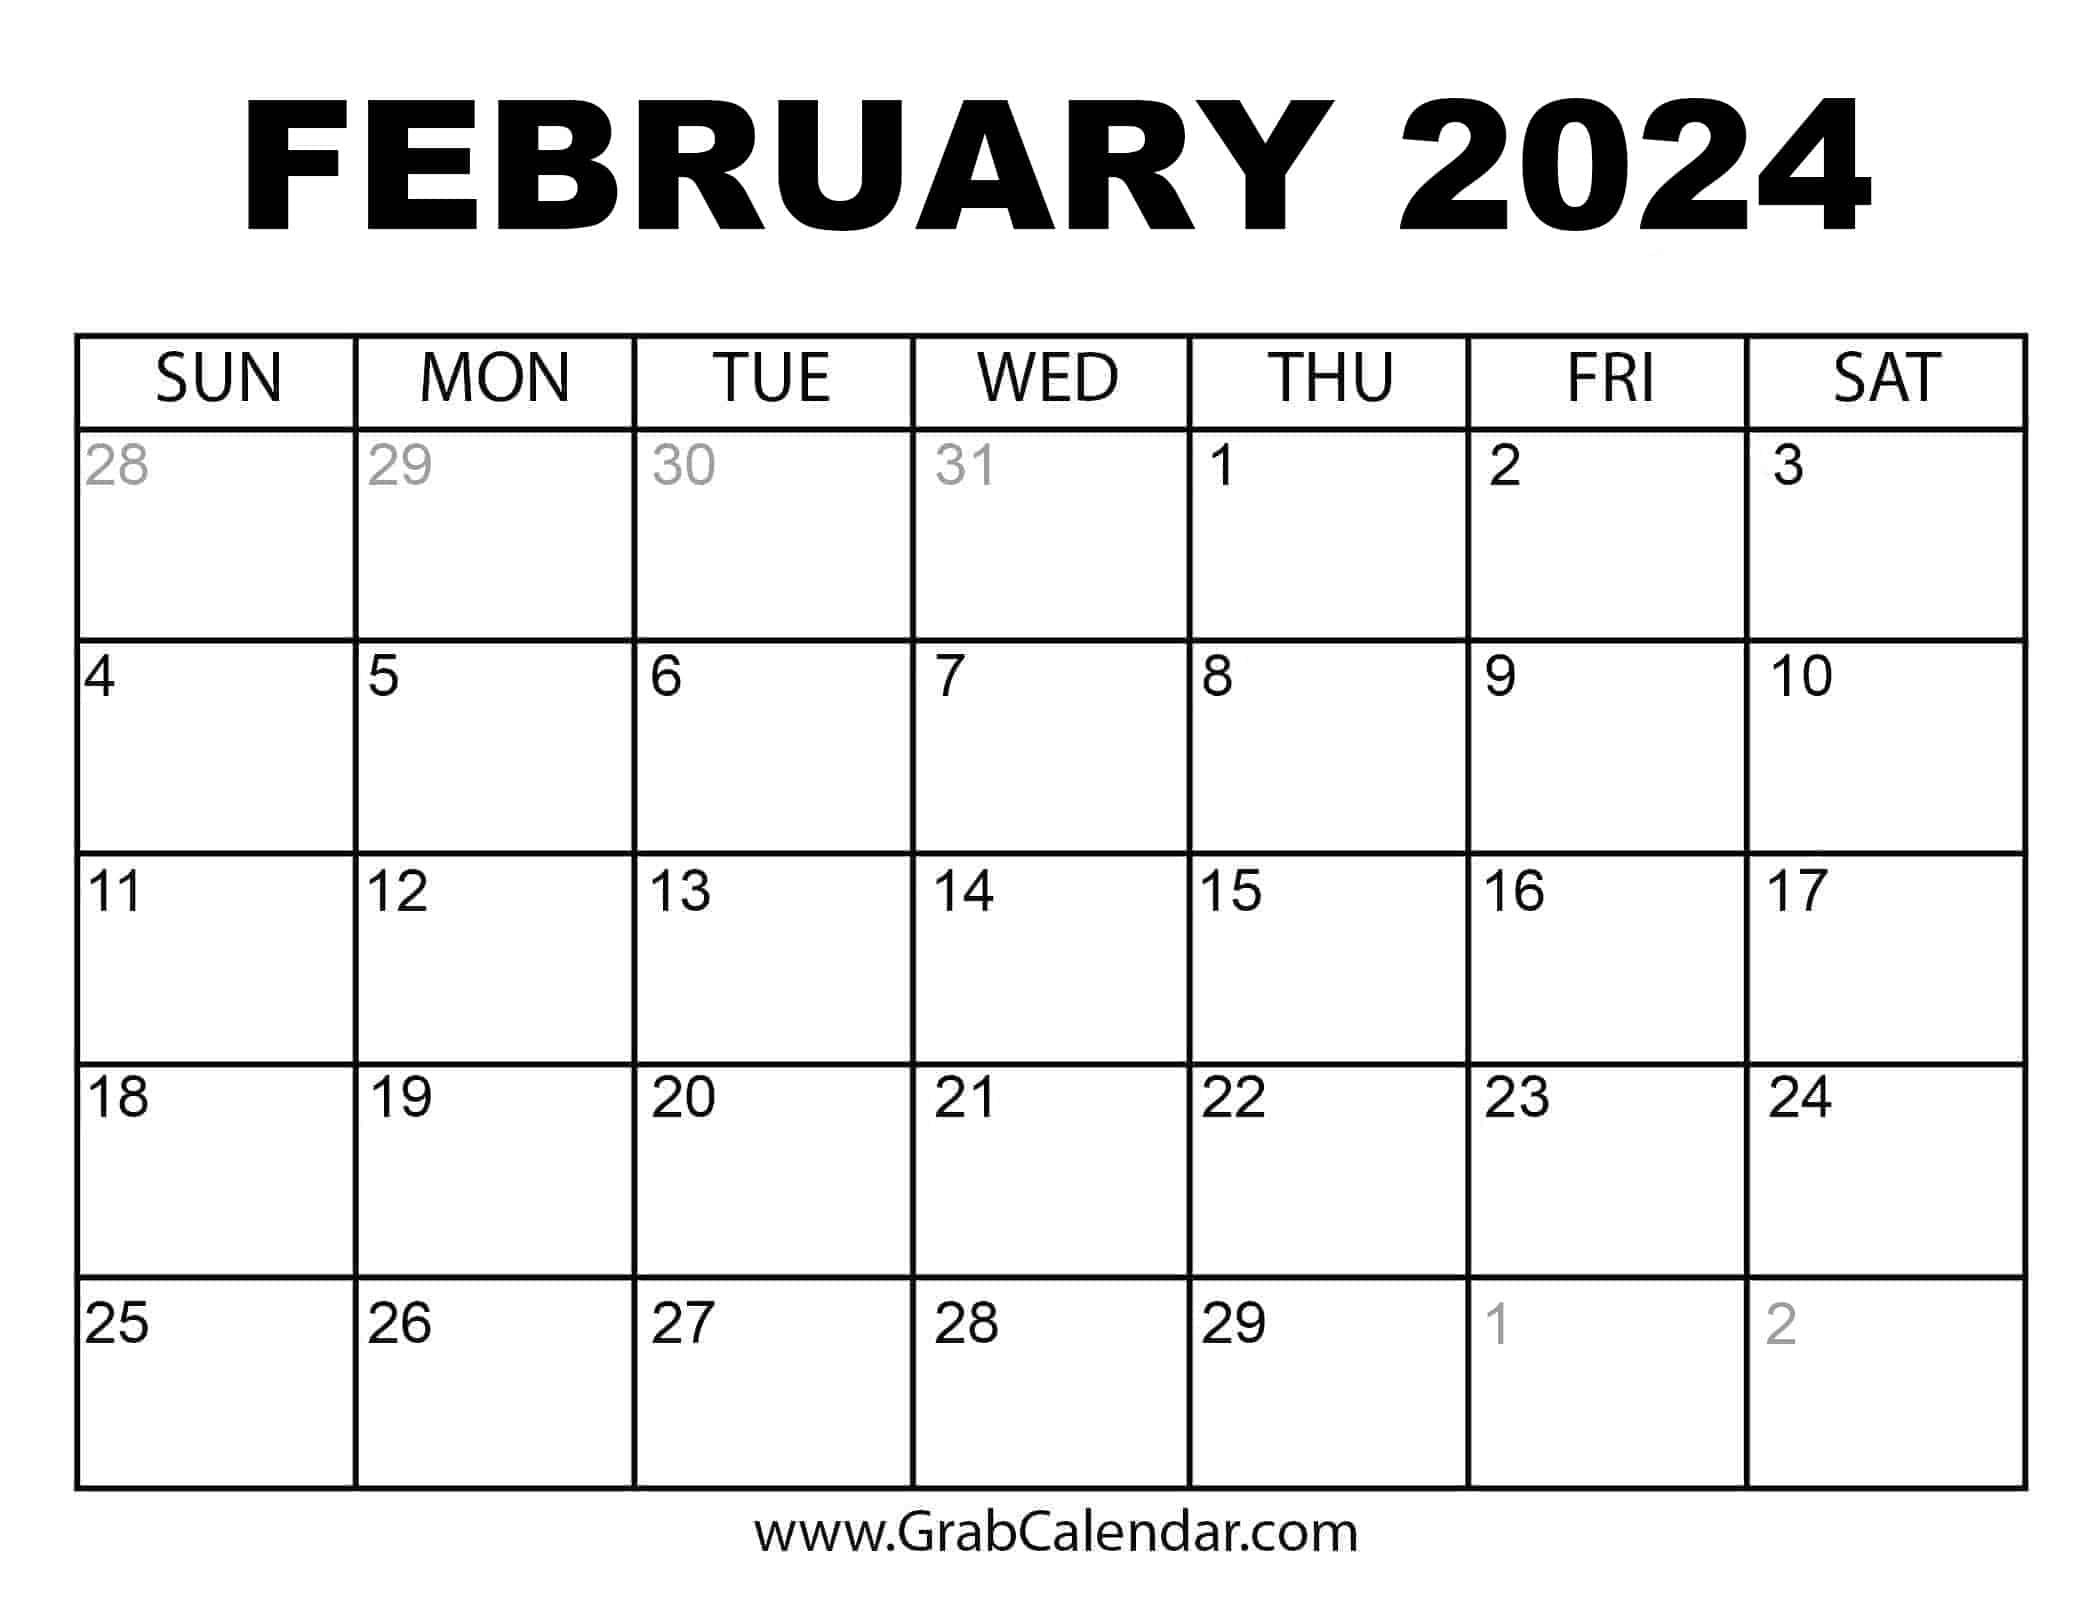 February 2024 Calendar To Print Lani Shanta - Free Printable Blank Calendar February 2024